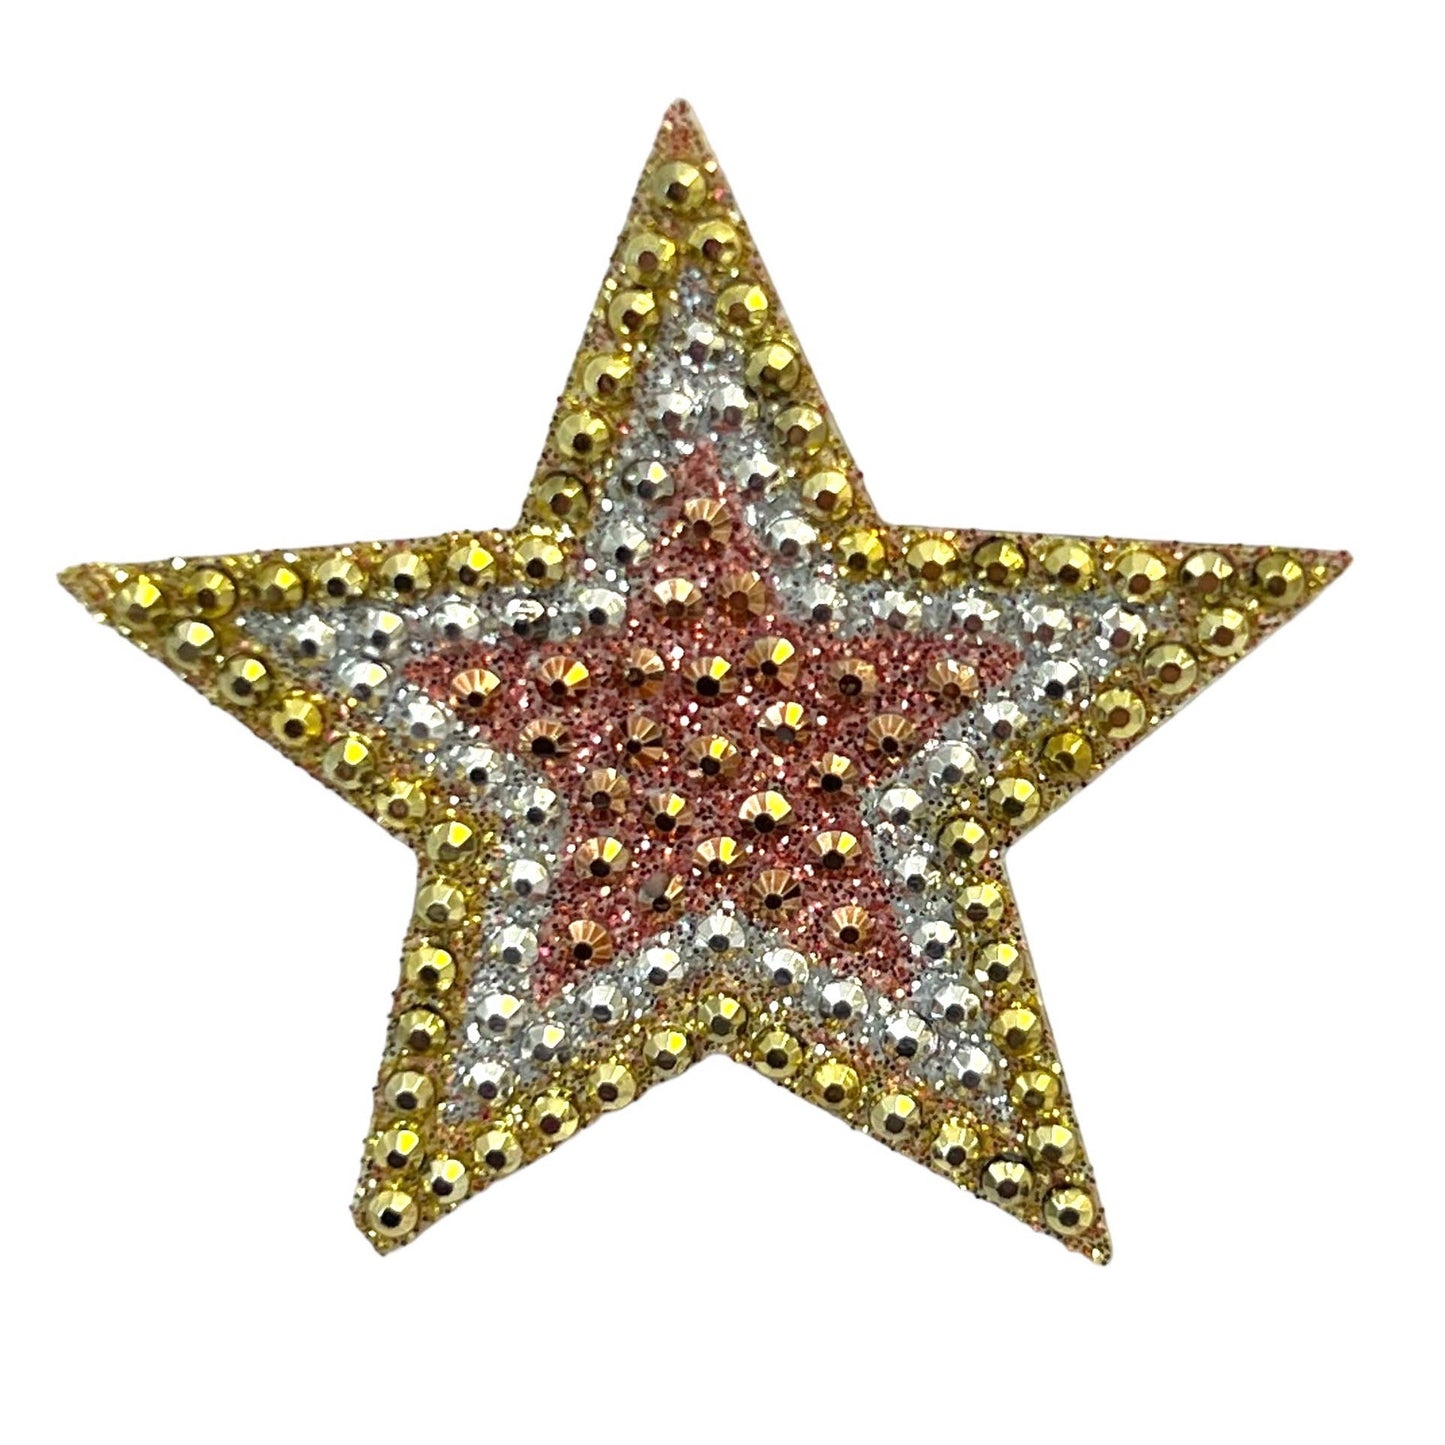 Tricolor Metallic Star